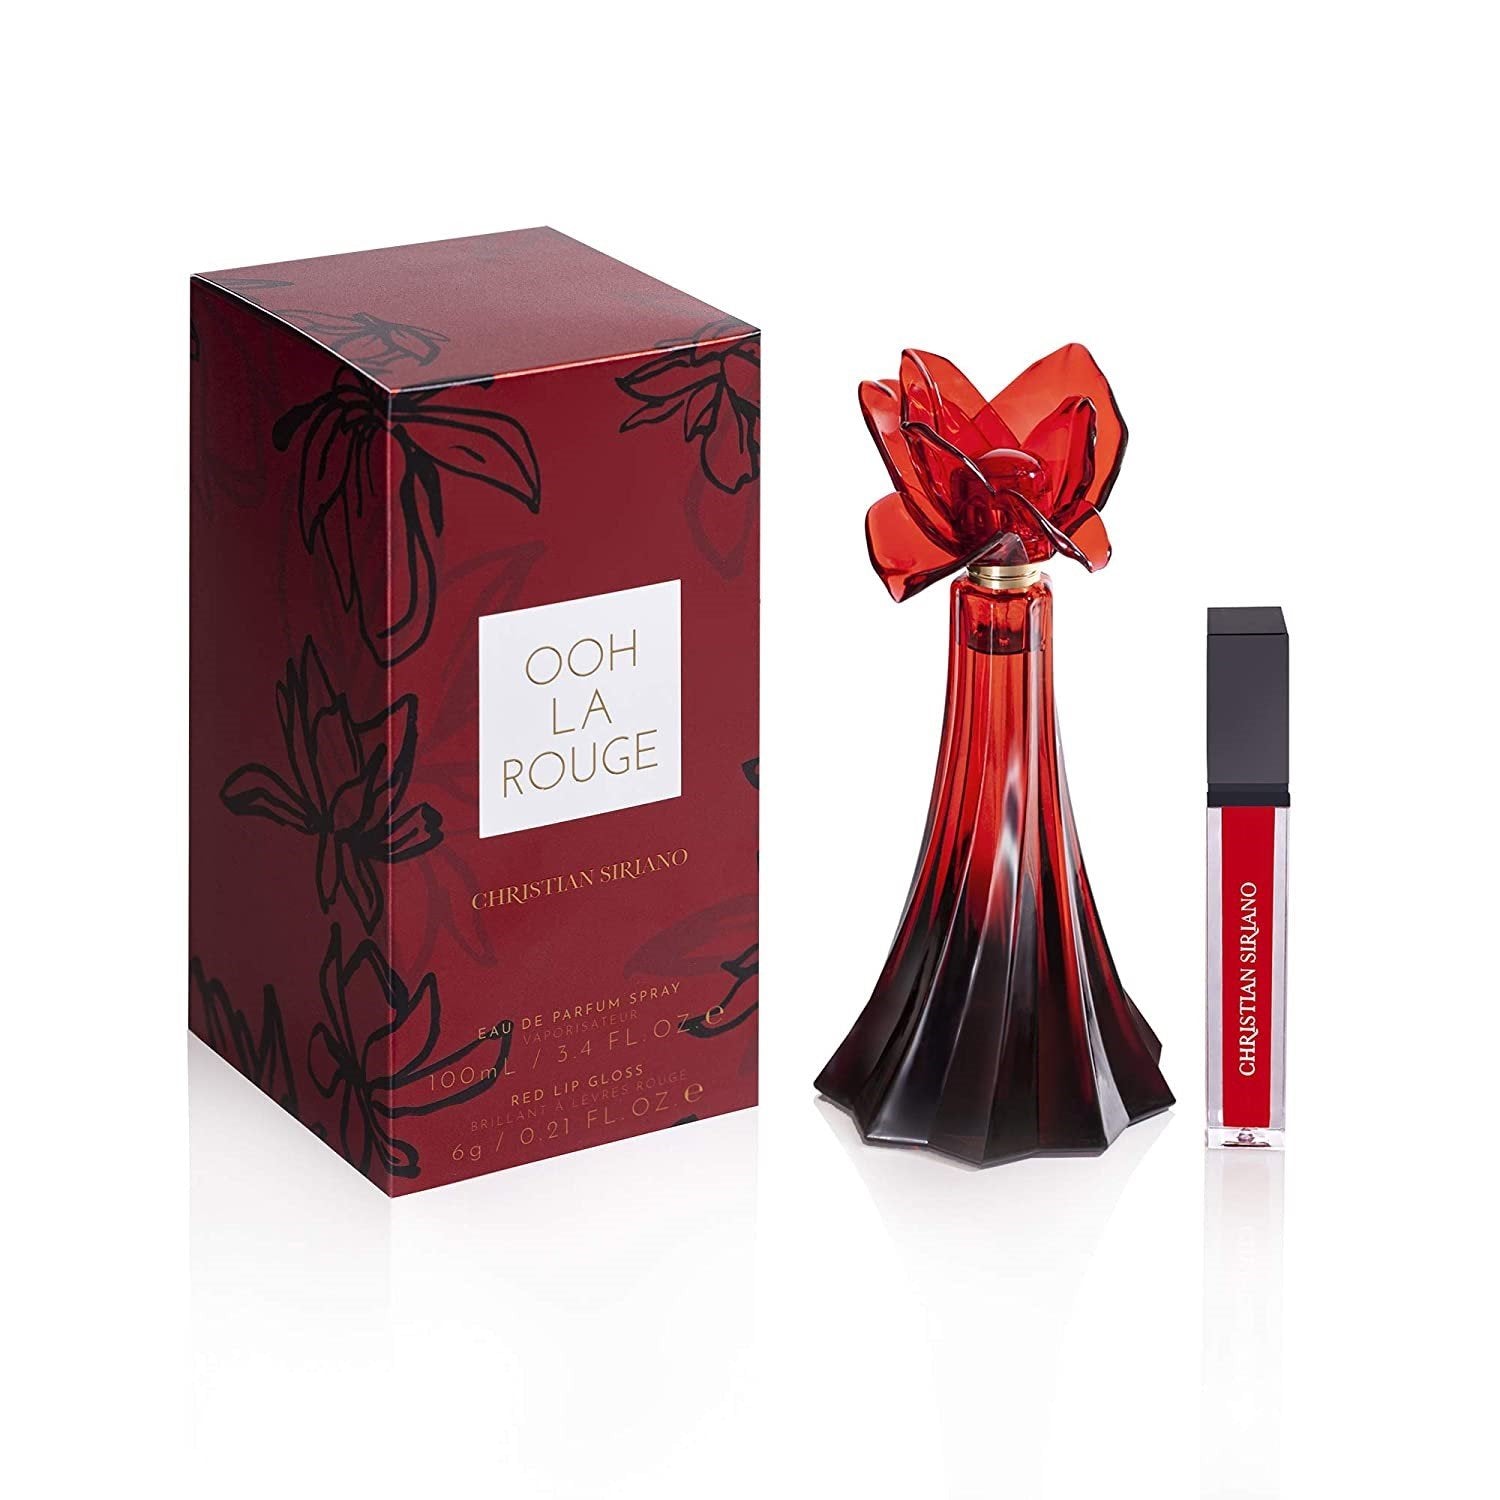 Ooh La Rouge Eau de Parfum Spray for Women by Christian Siriano, Product image 1